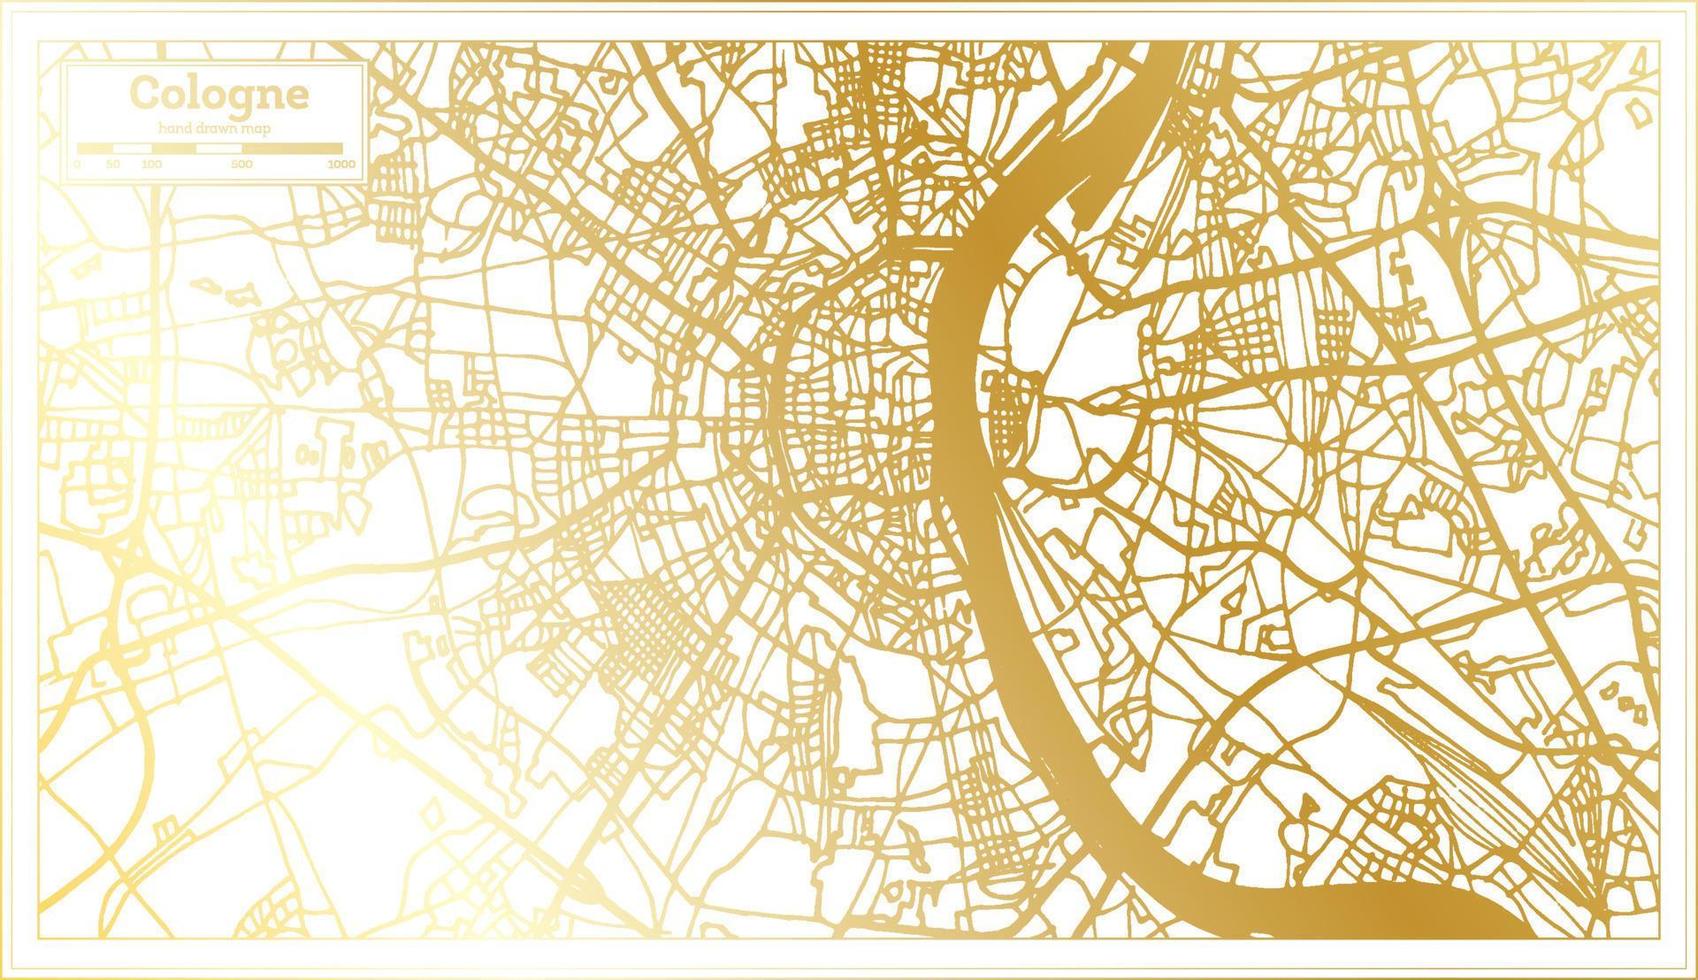 köln deutschland stadtplan im retro-stil in goldener farbe. Übersichtskarte. vektor